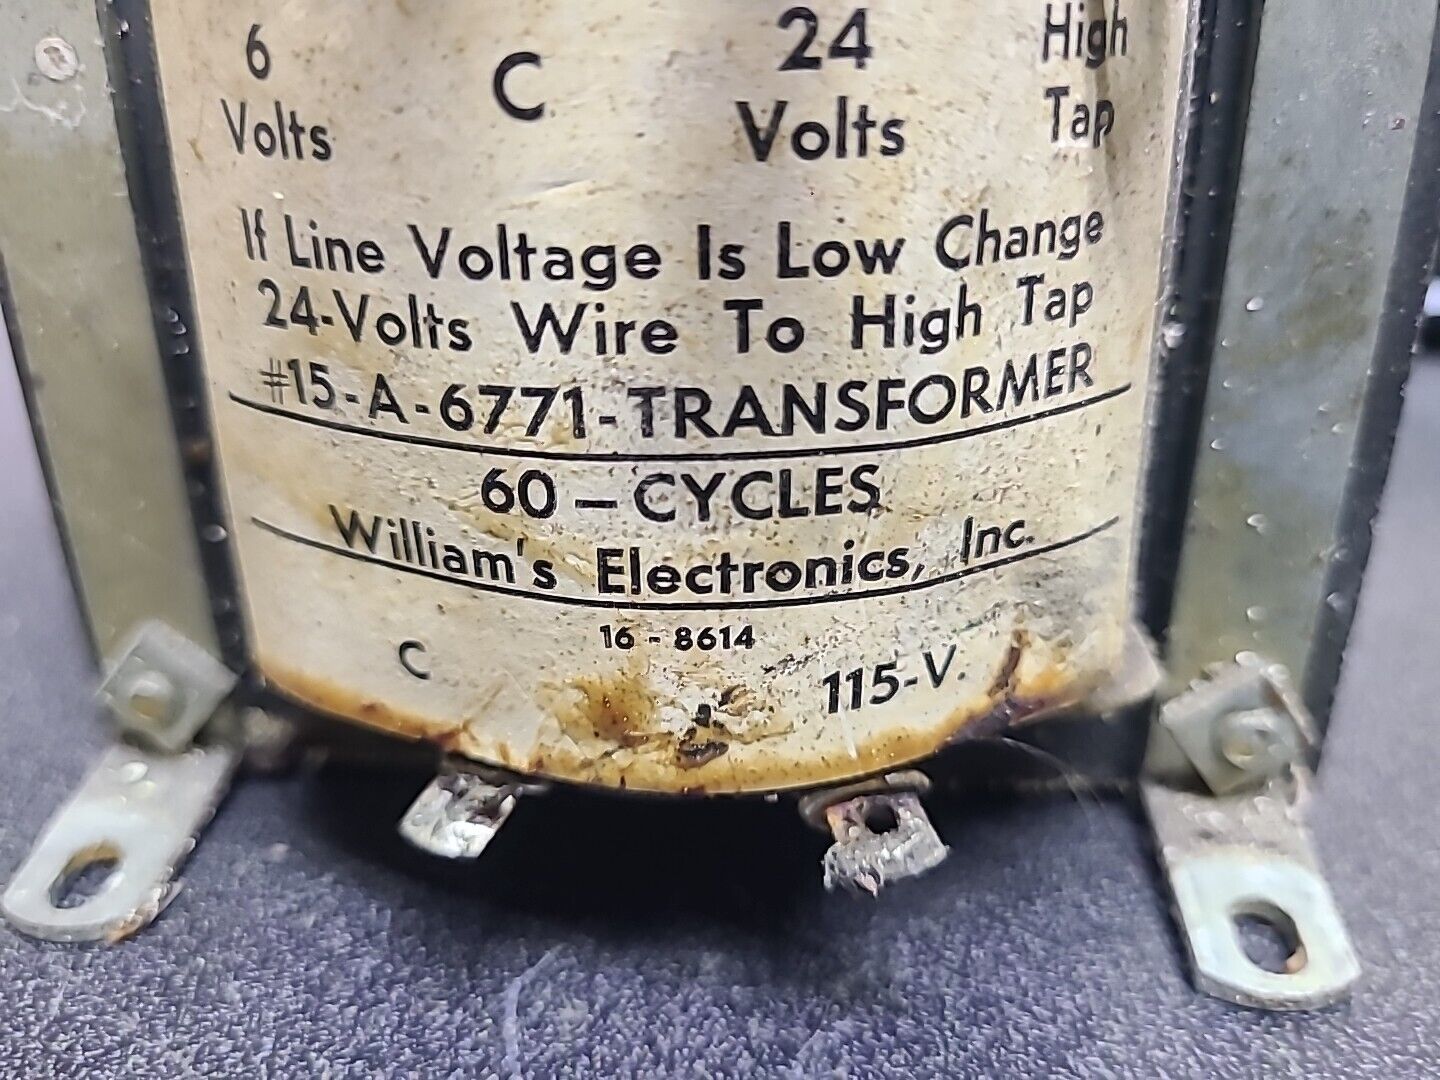 William's EM Pinball Machine USED Transformer 15-A-6771